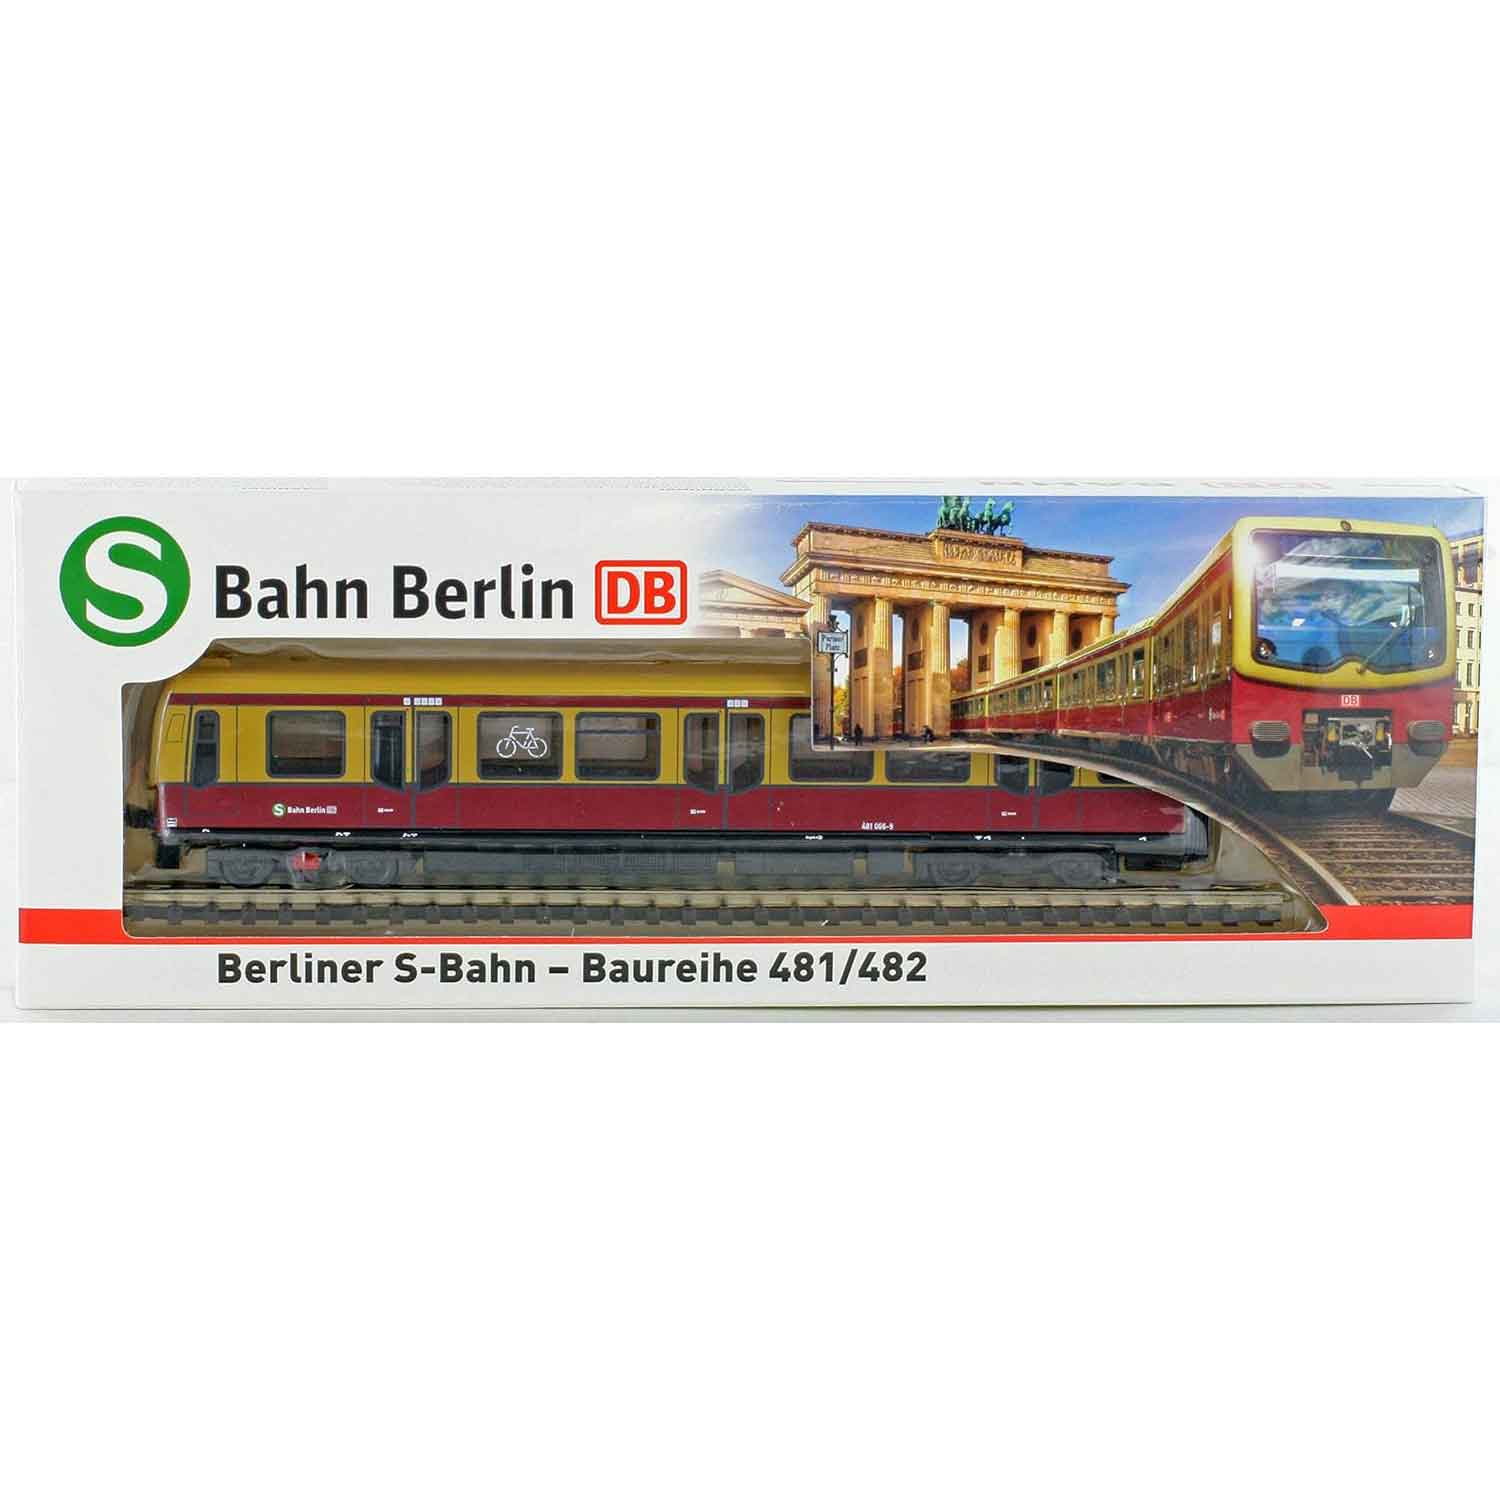 Miniature S-Bahn Berlin 1:120 BR481